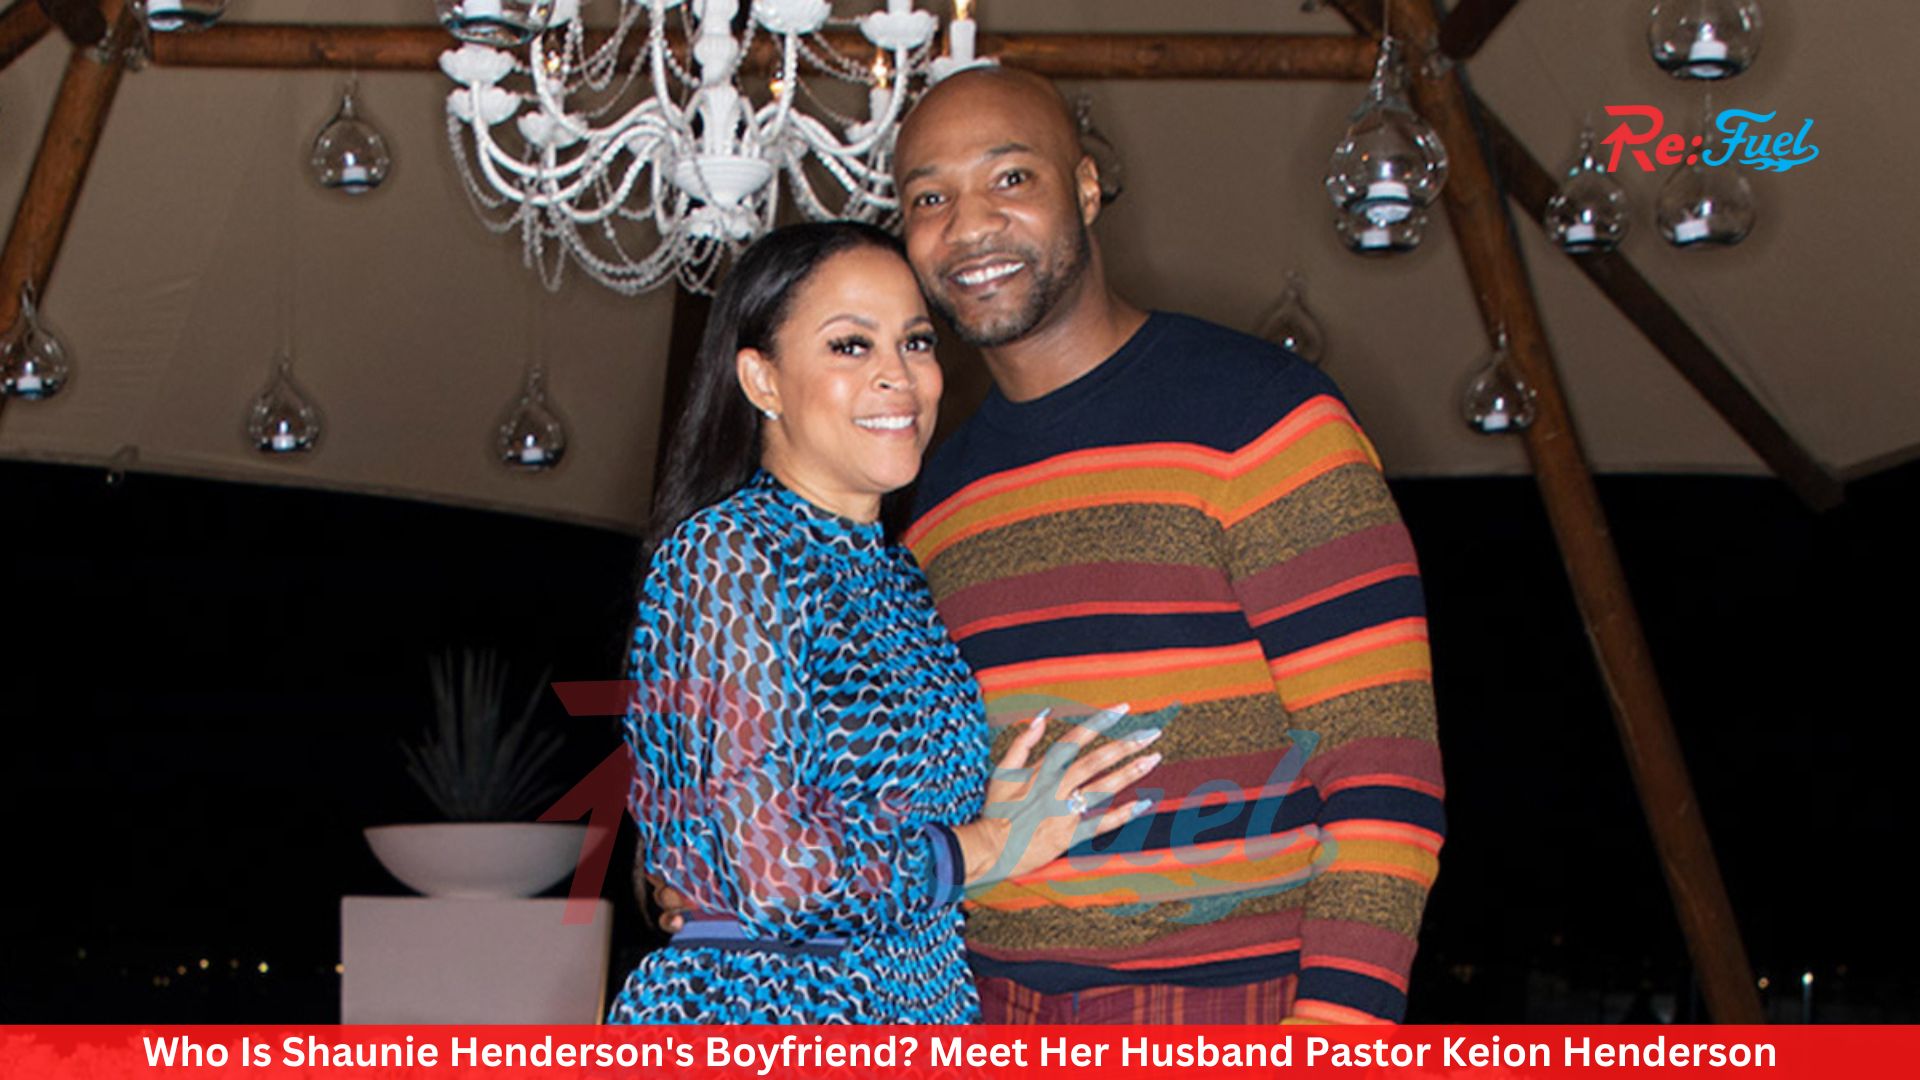 Who Is Shaunie Henderson's Boyfriend? Meet Her Husband Pastor Keion Henderson